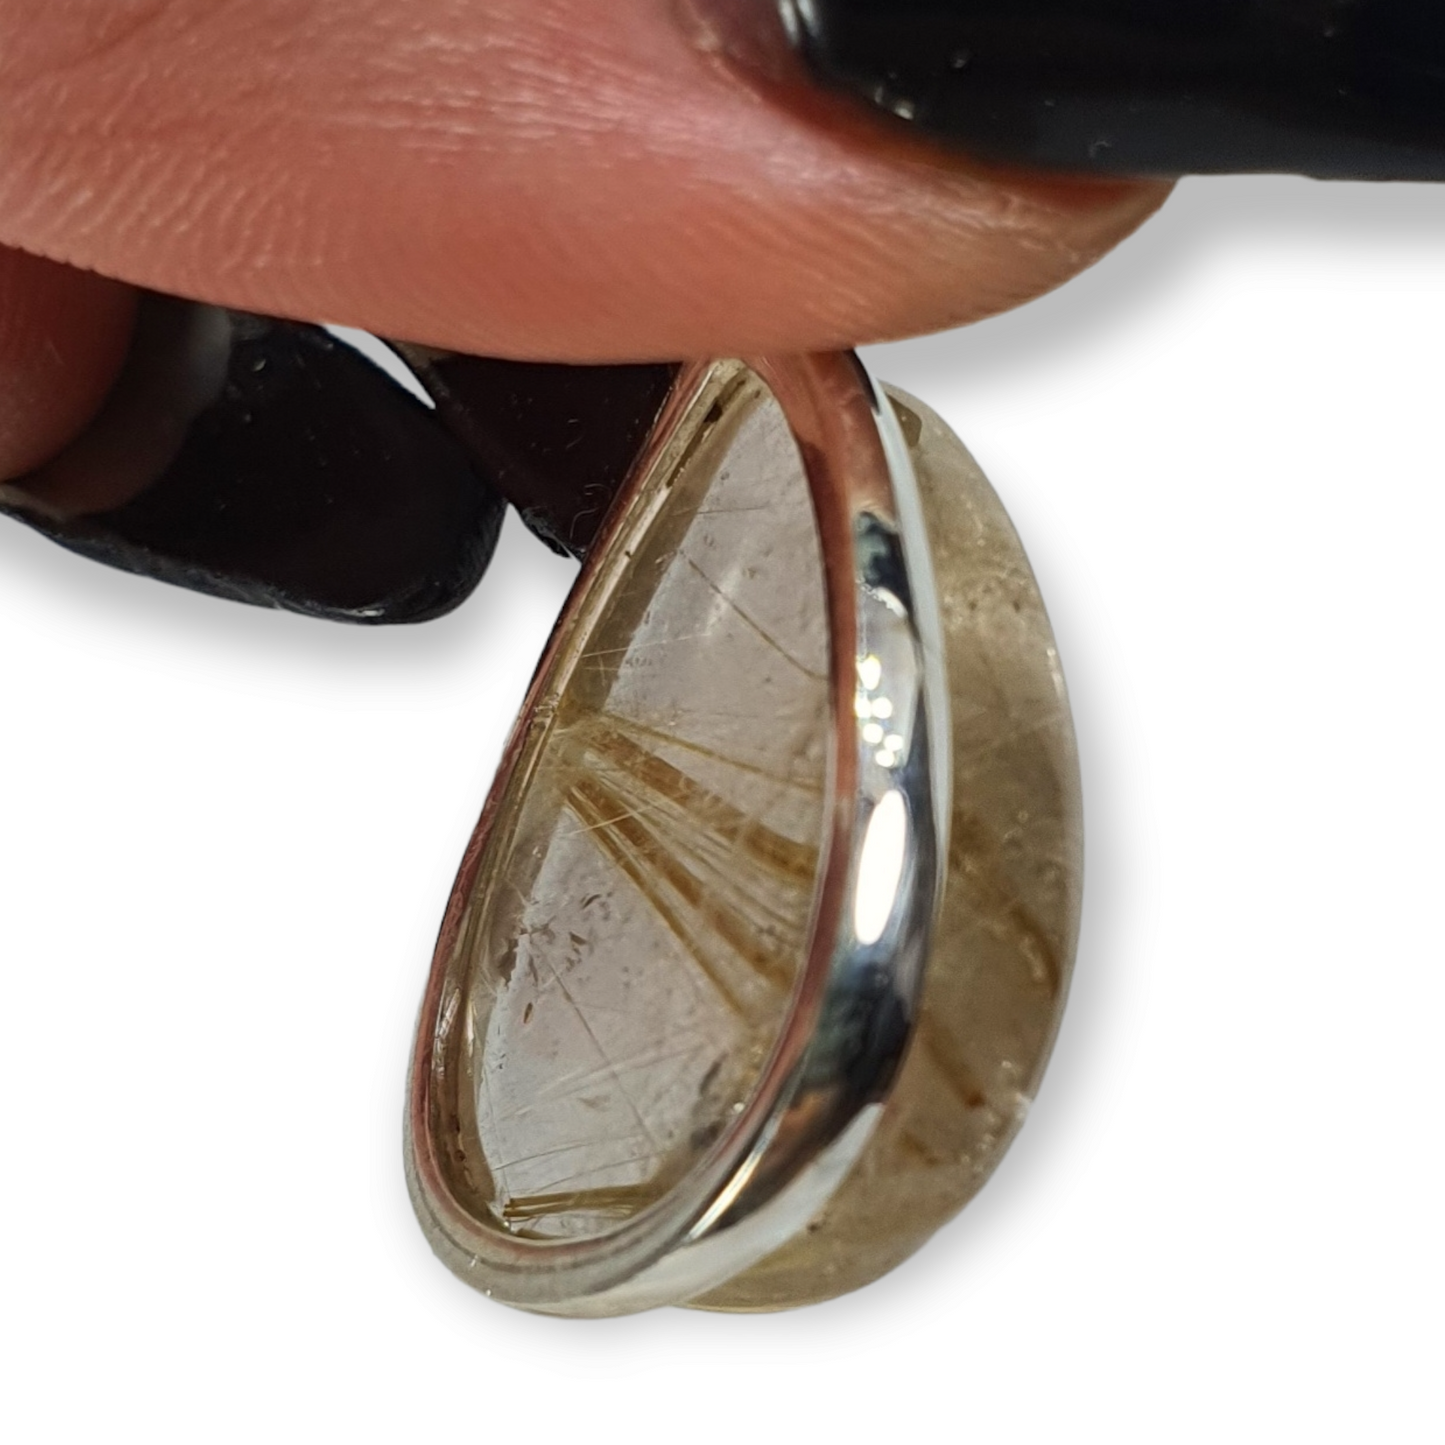 Crystals - Golden Rutile Quartz Cabochon Teardrop Pendant - Sterling Silver